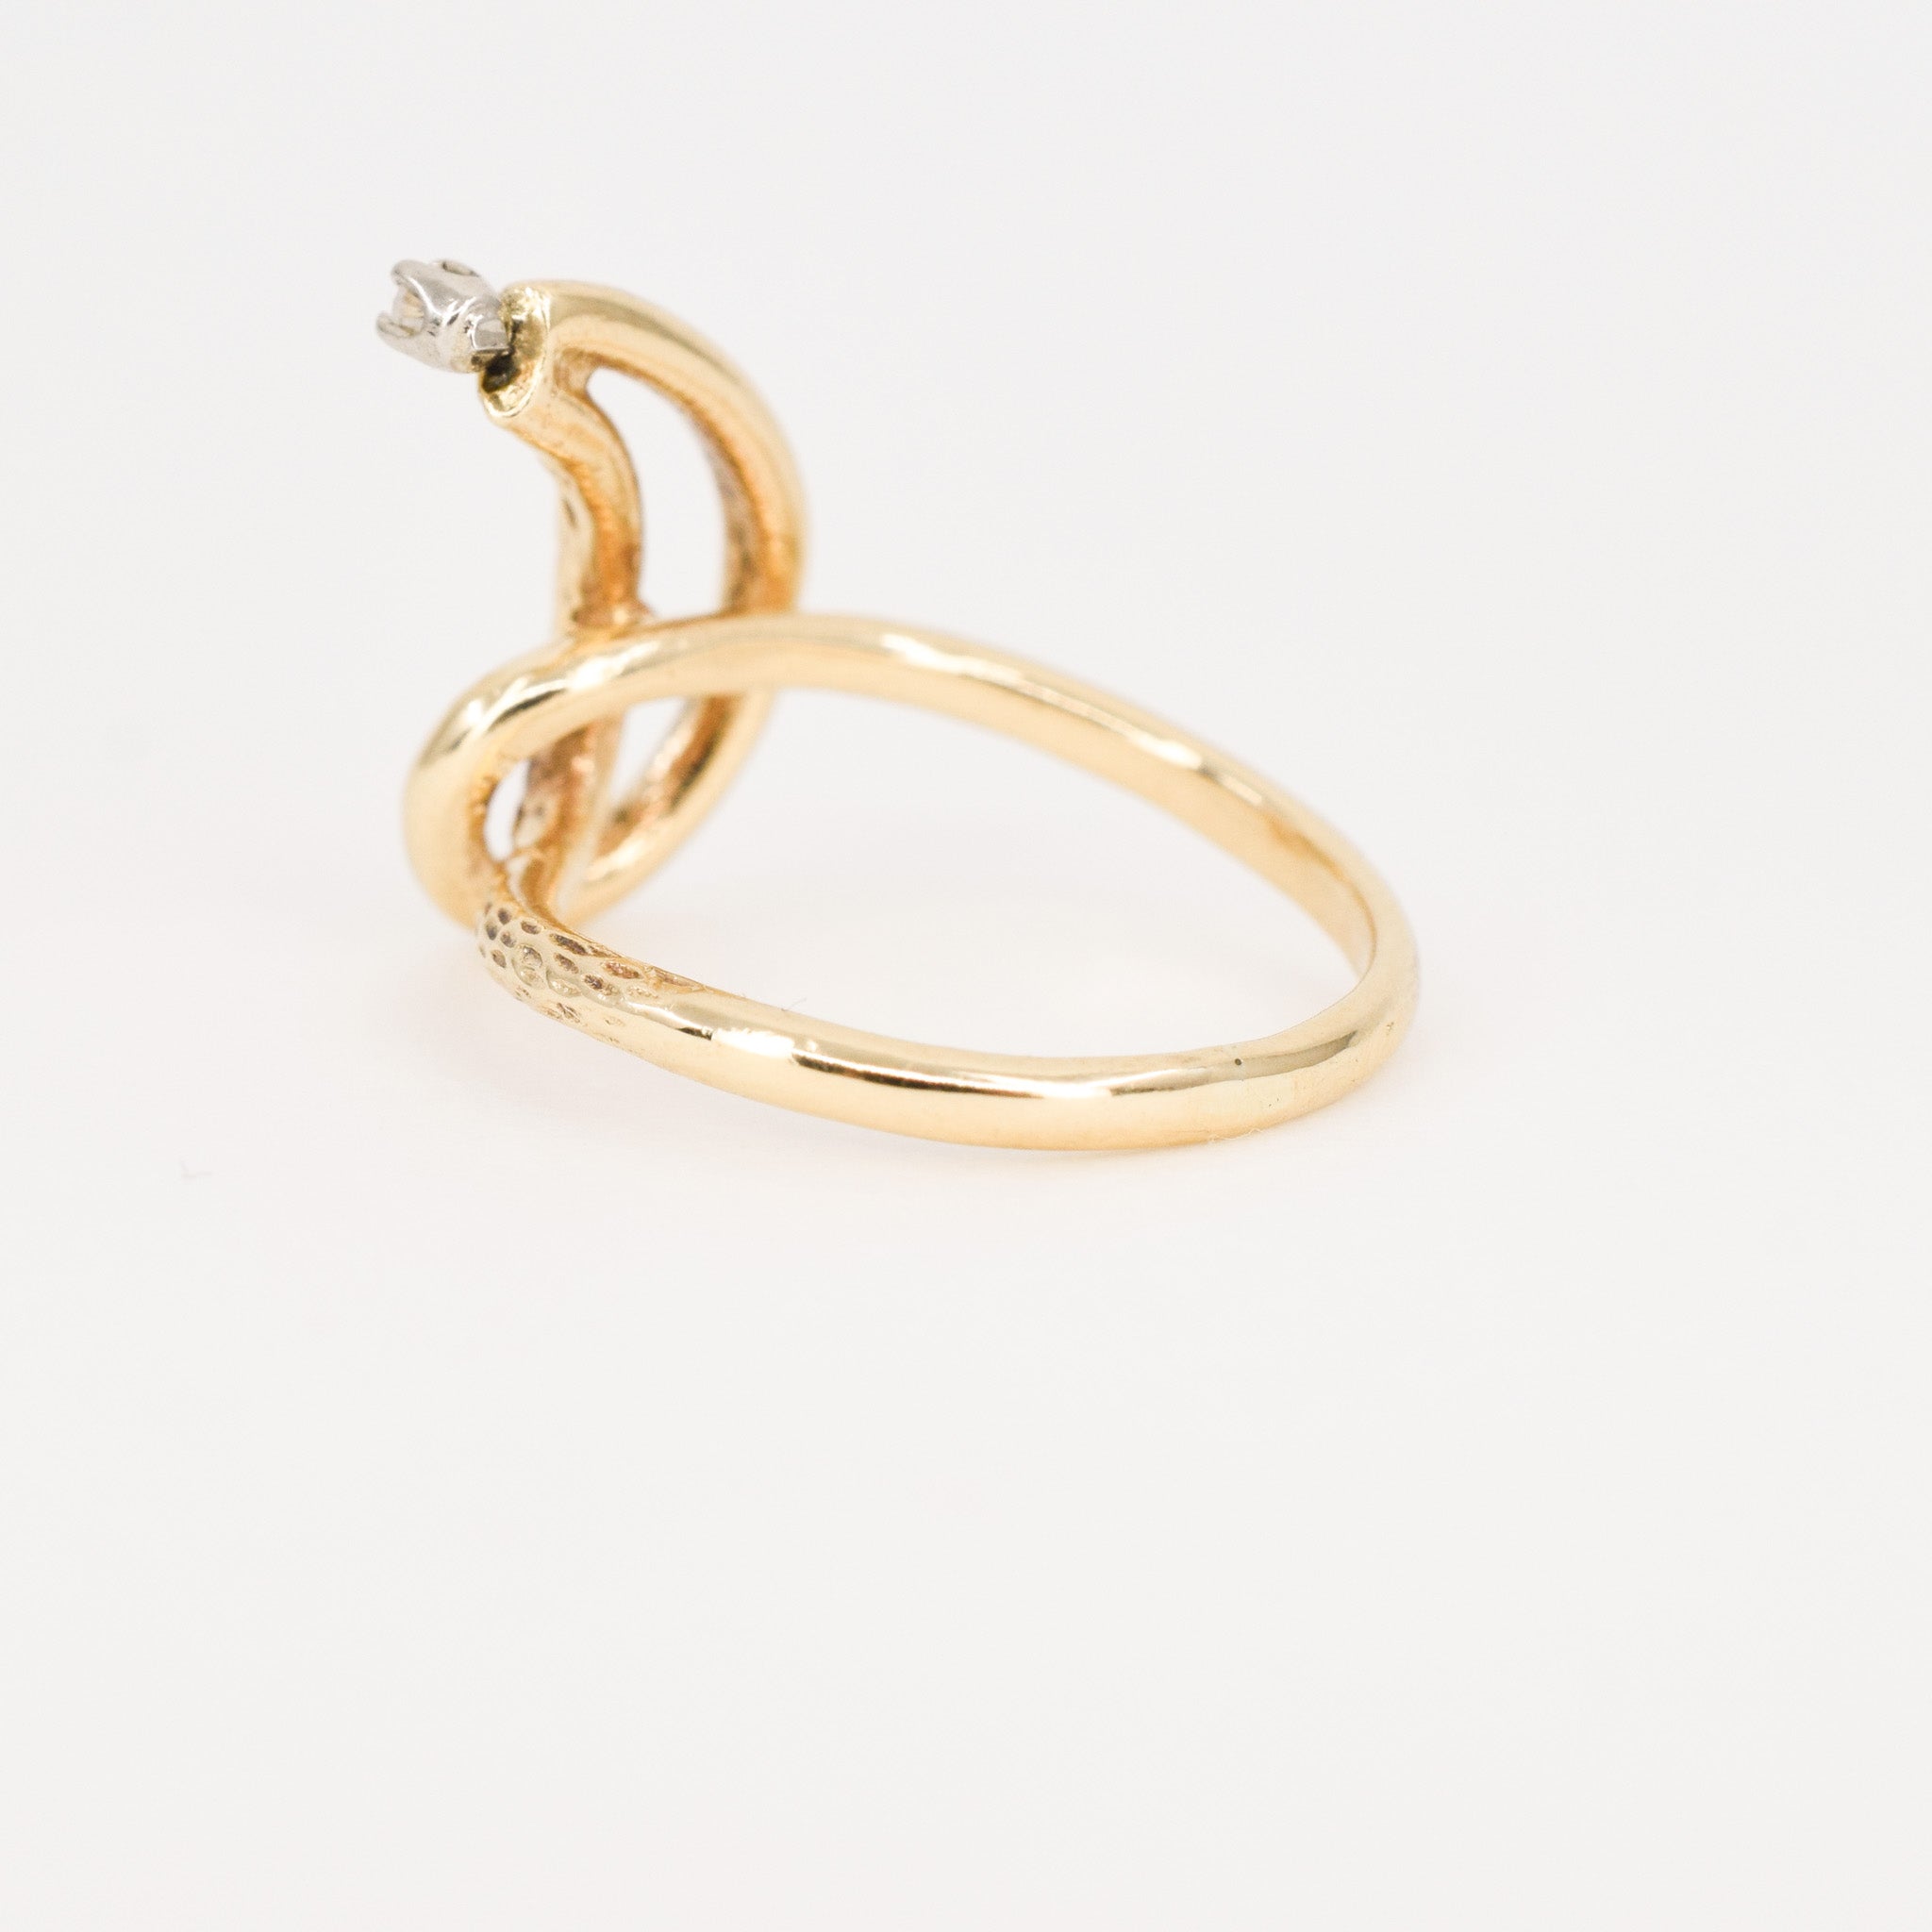 14k vintage crescent moon ring, folklor vintage jewelry canada